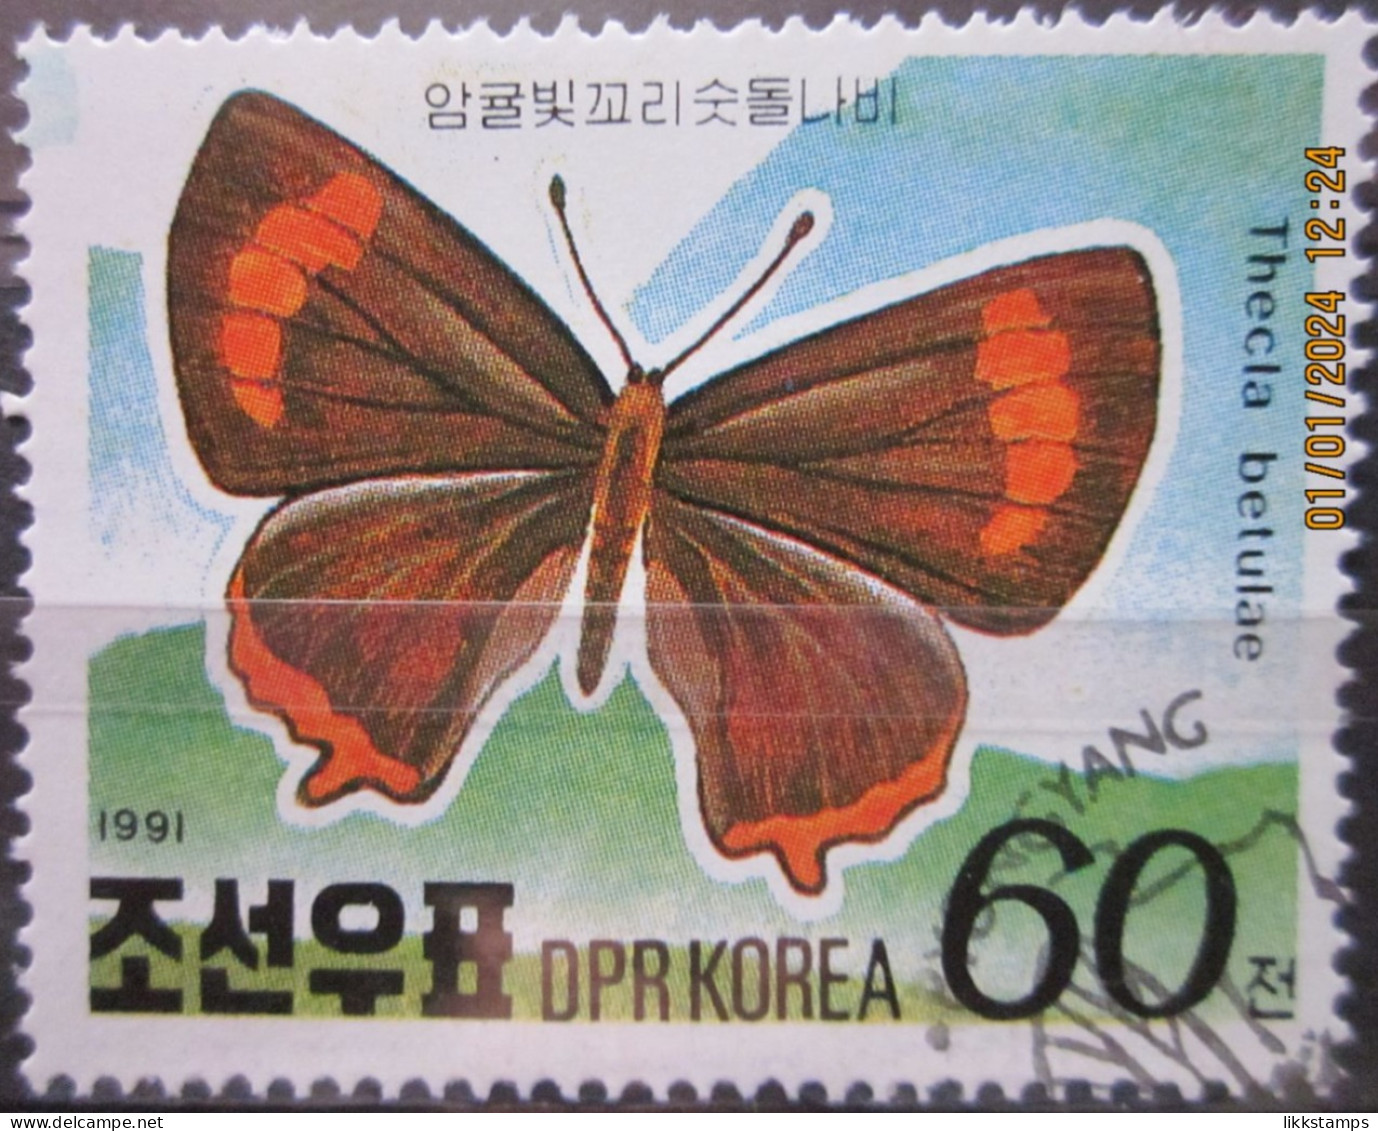 NORTH KOREA ~ 1991 ~ S.G. N3039, ~ ALPINE BUTTERFLIES. ~ VFU #03402 - Korea (Nord-)